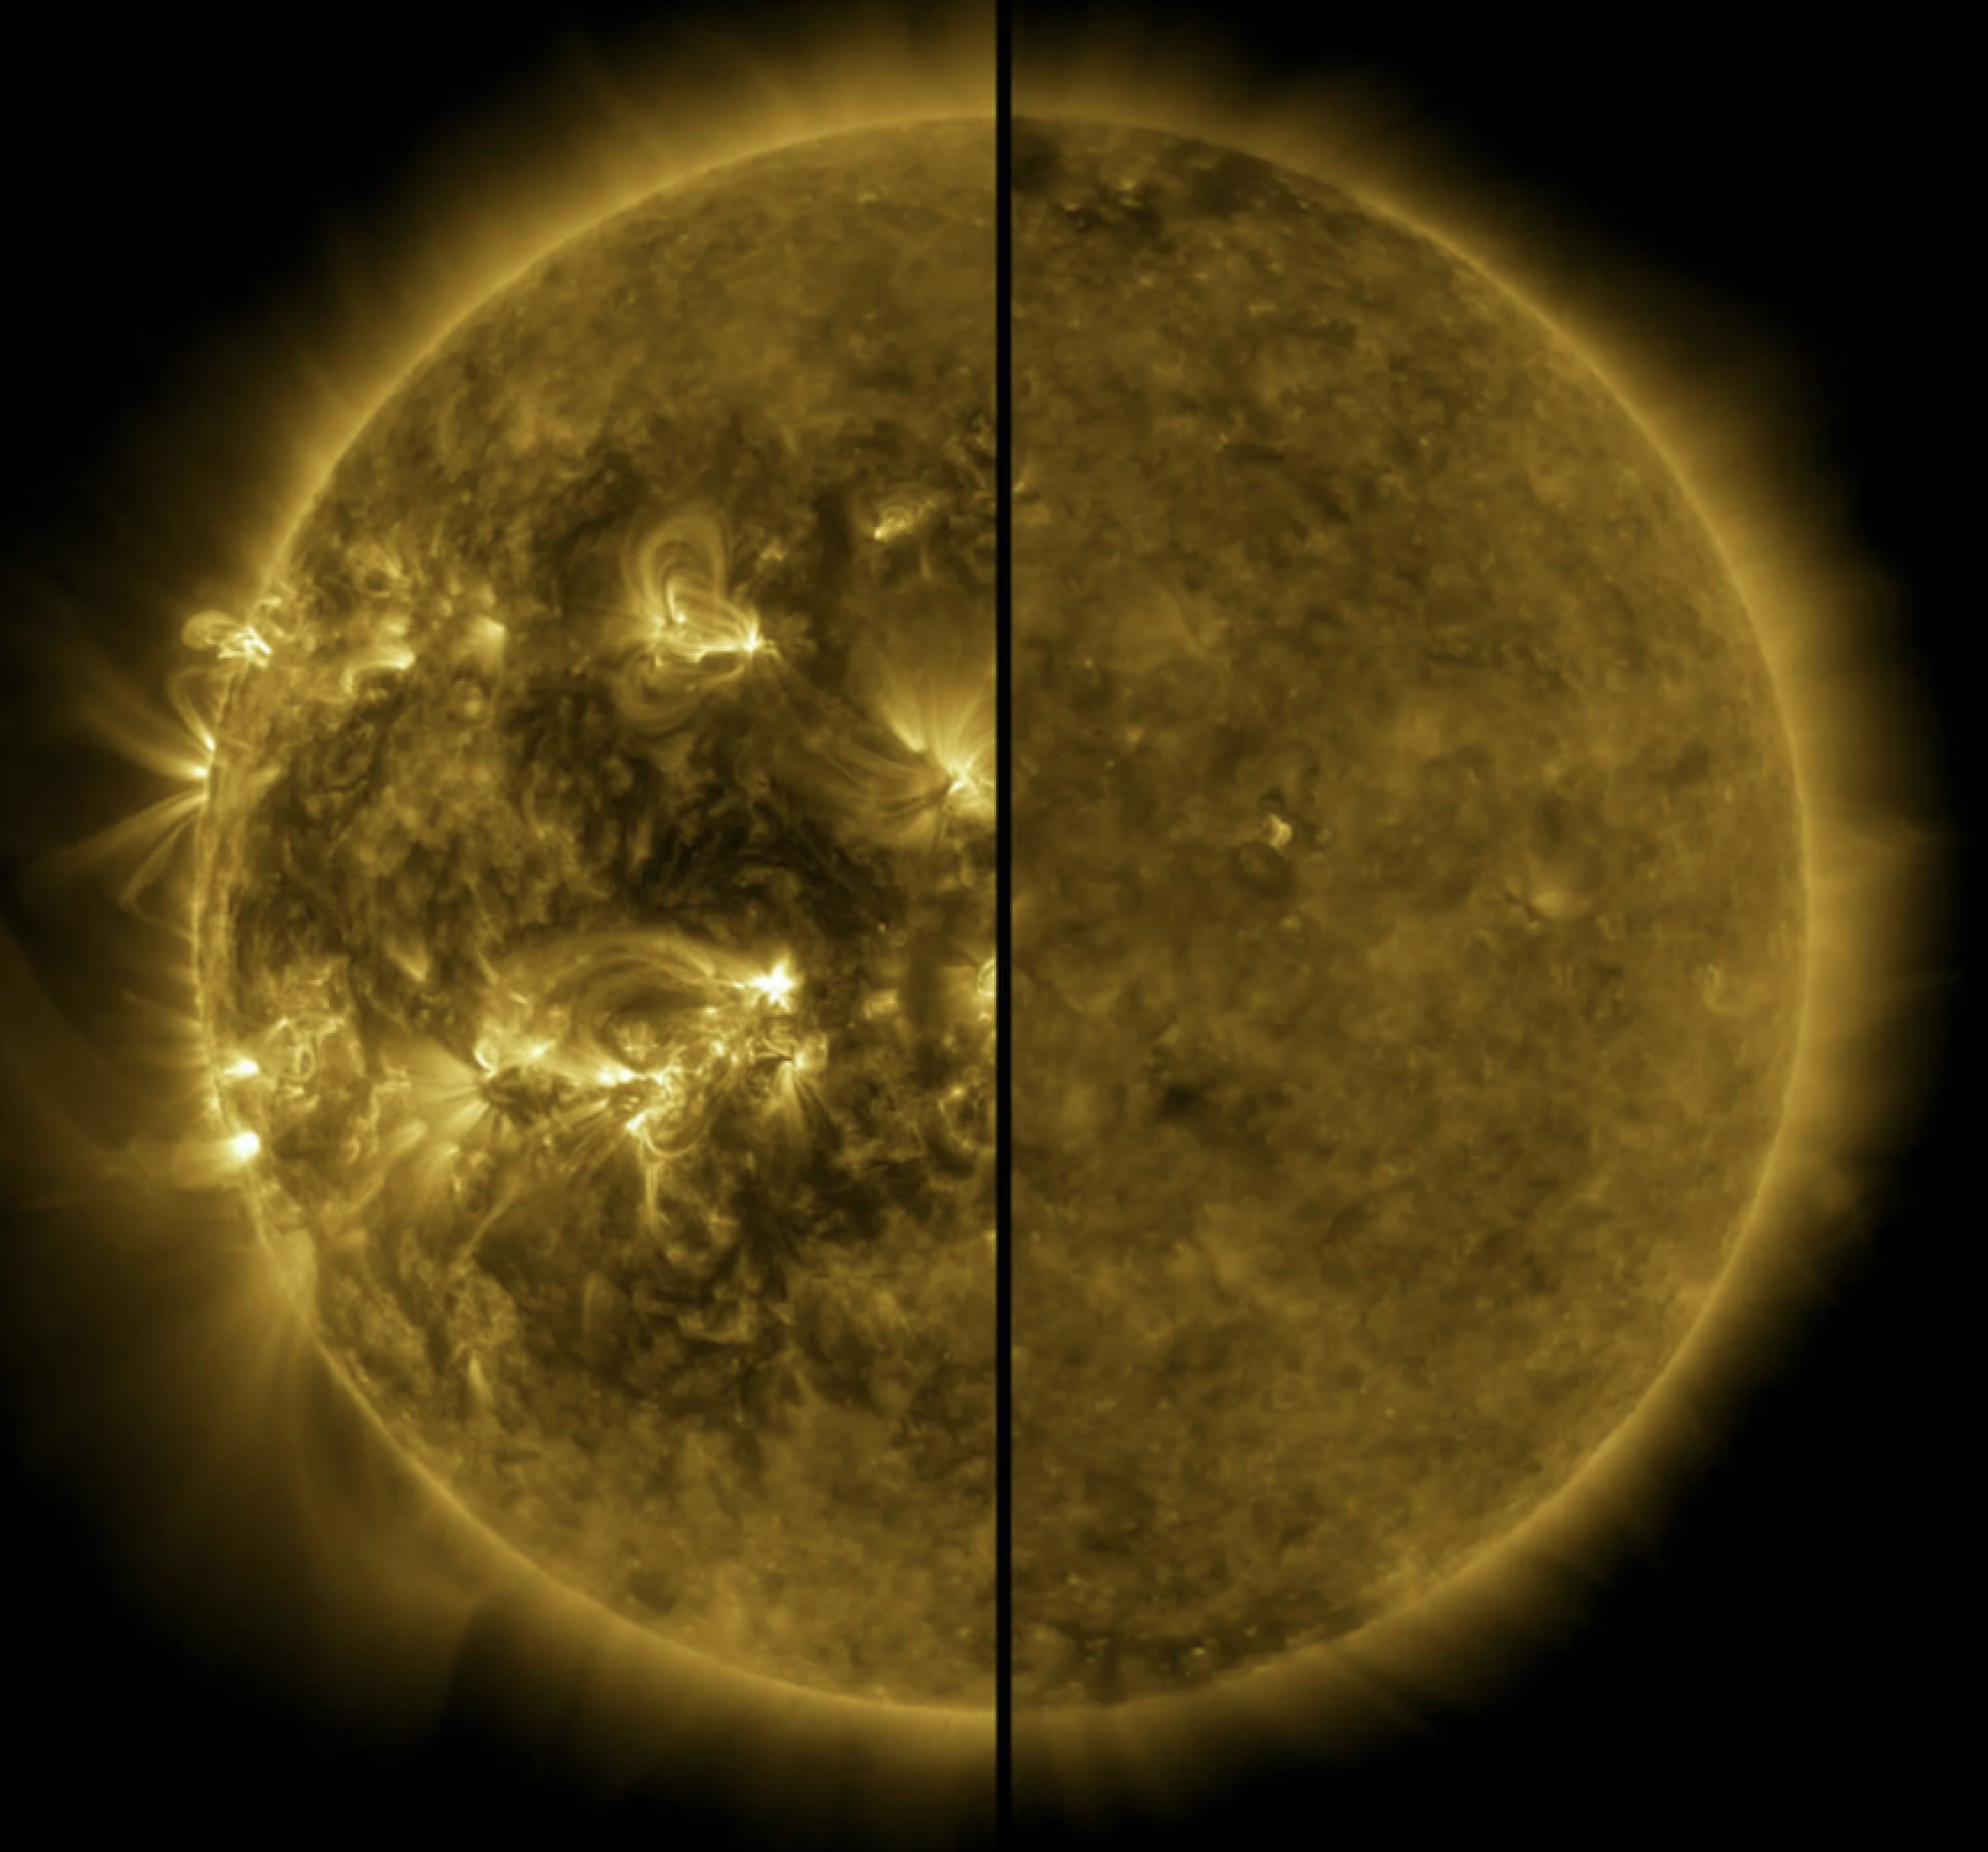 On left: the sun during solar maximum. On right: the sun during solar minimum. 